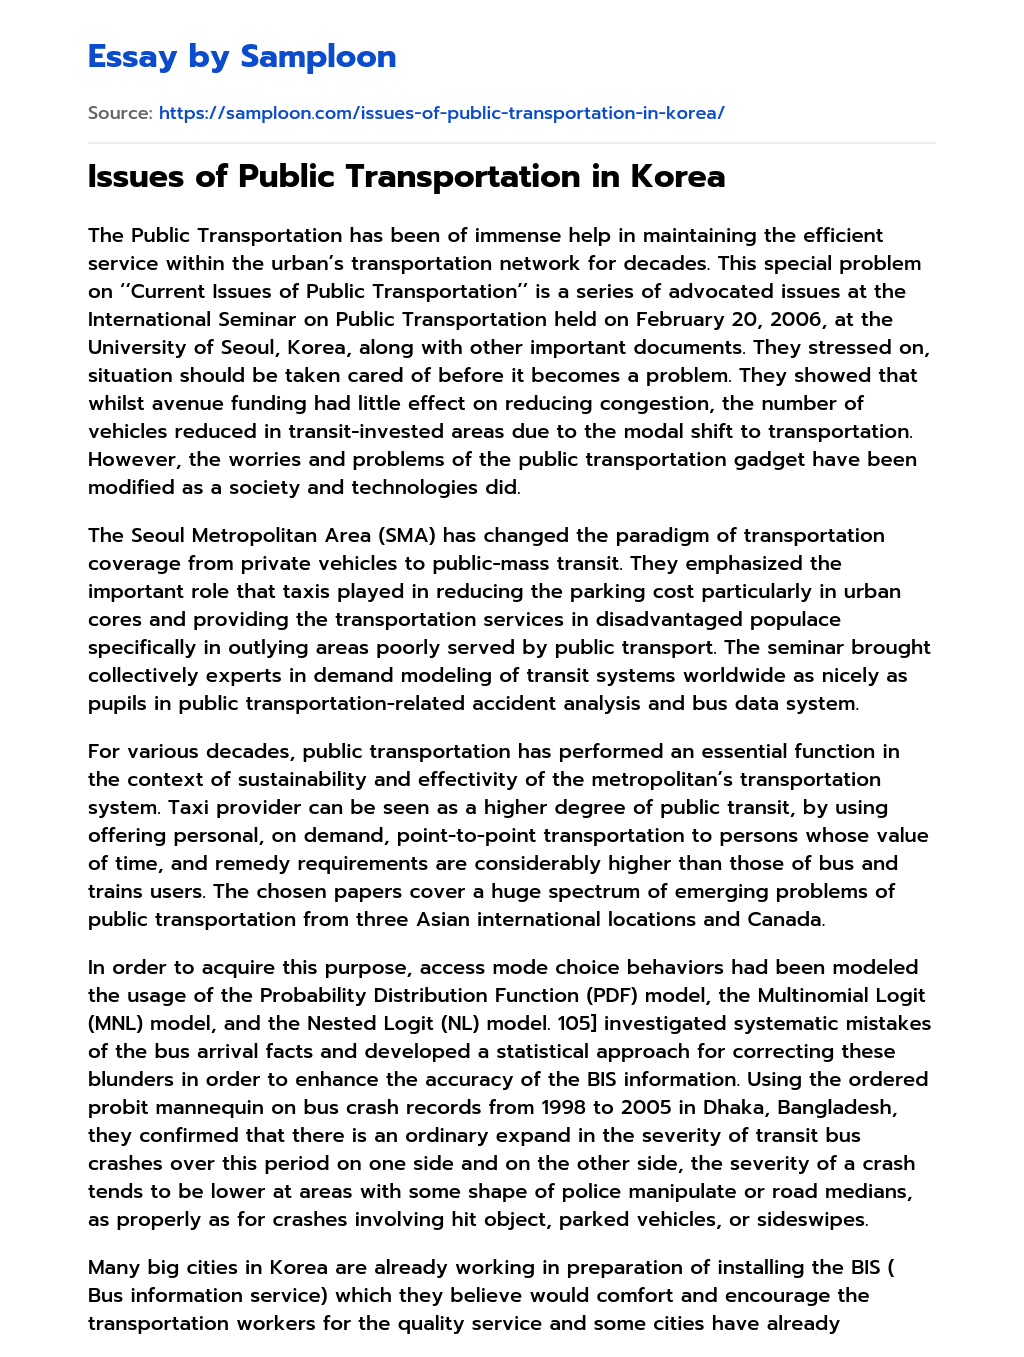 Issues of Public Transportation in Korea essay